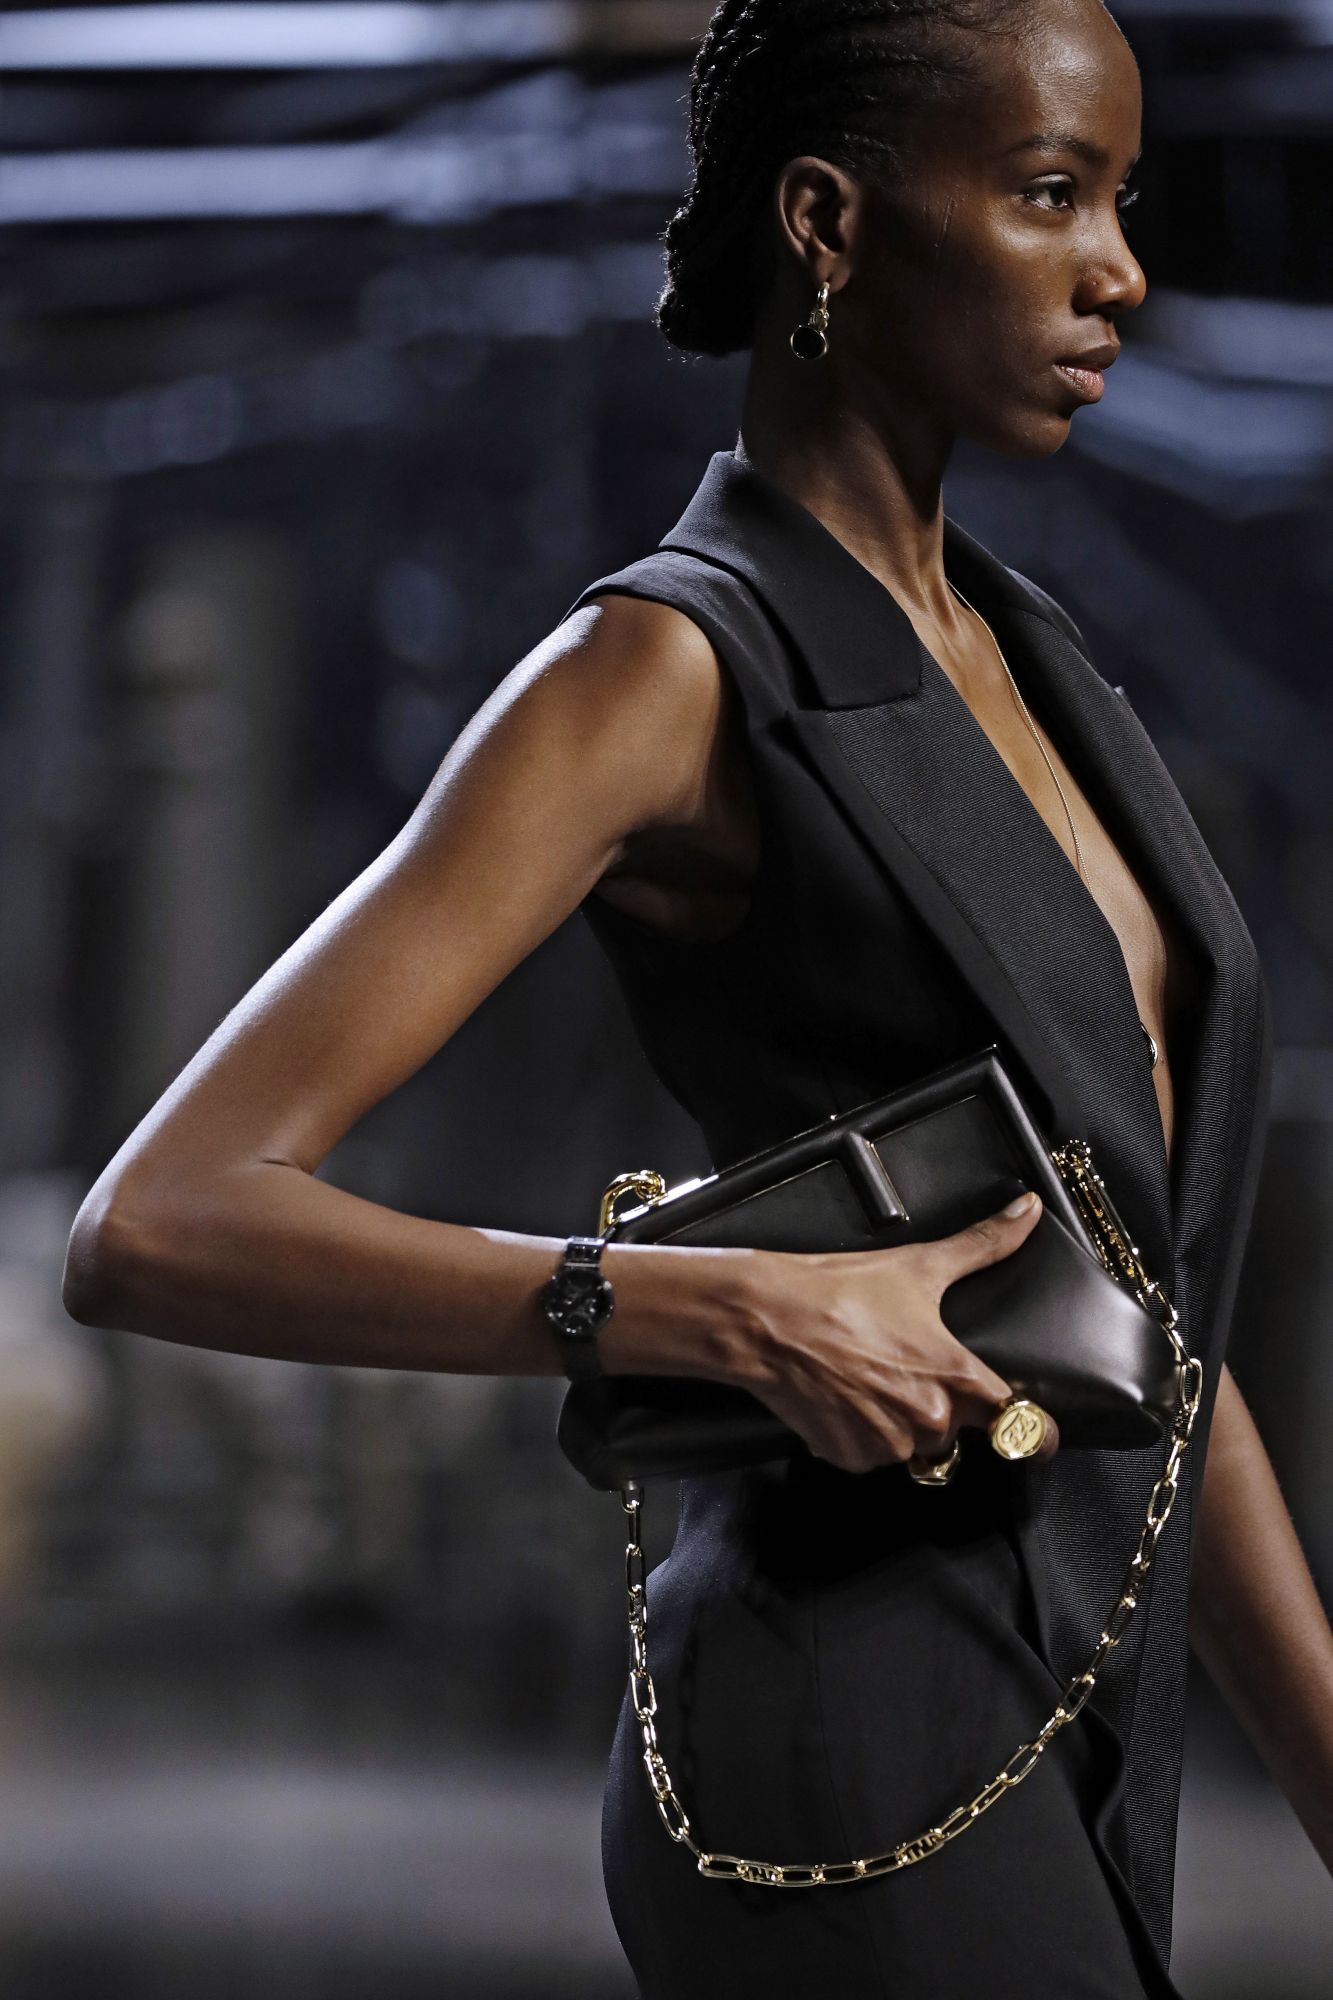 Fendi Showcases New Shapes Alongside Its Iconic Bags for Fall 2021